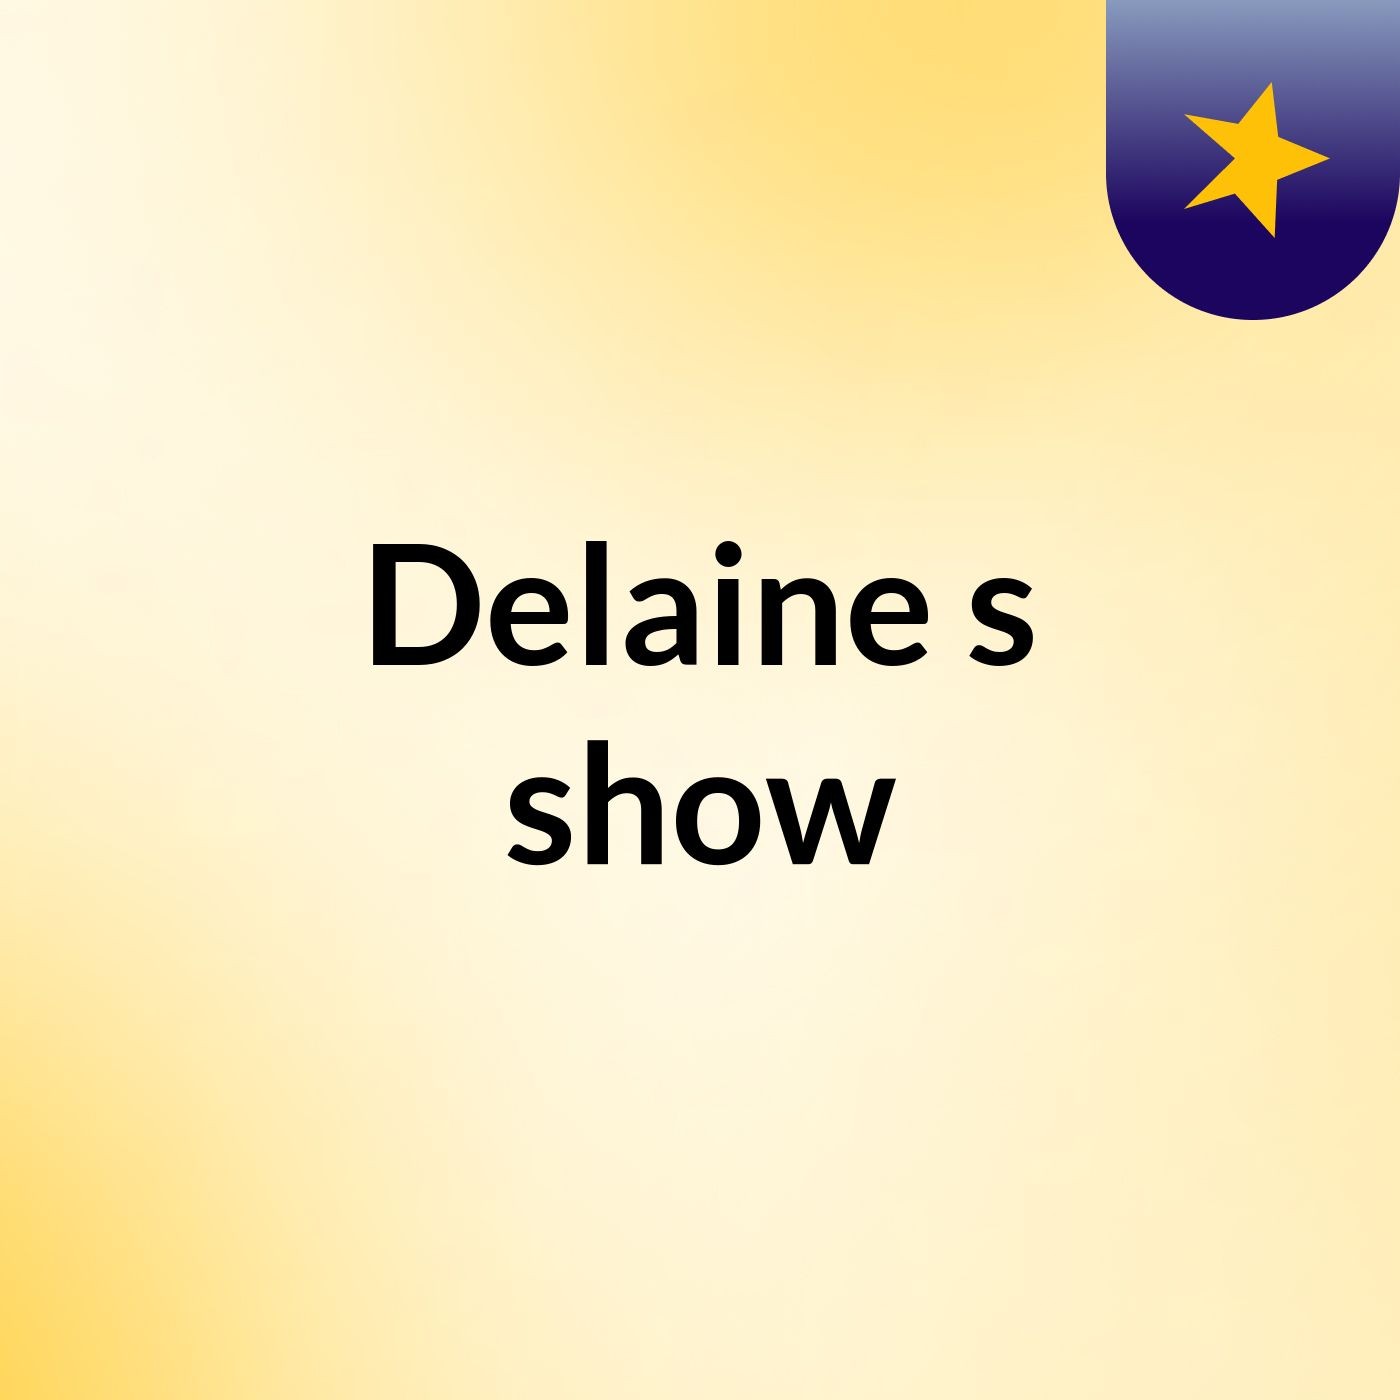 Delaine's show